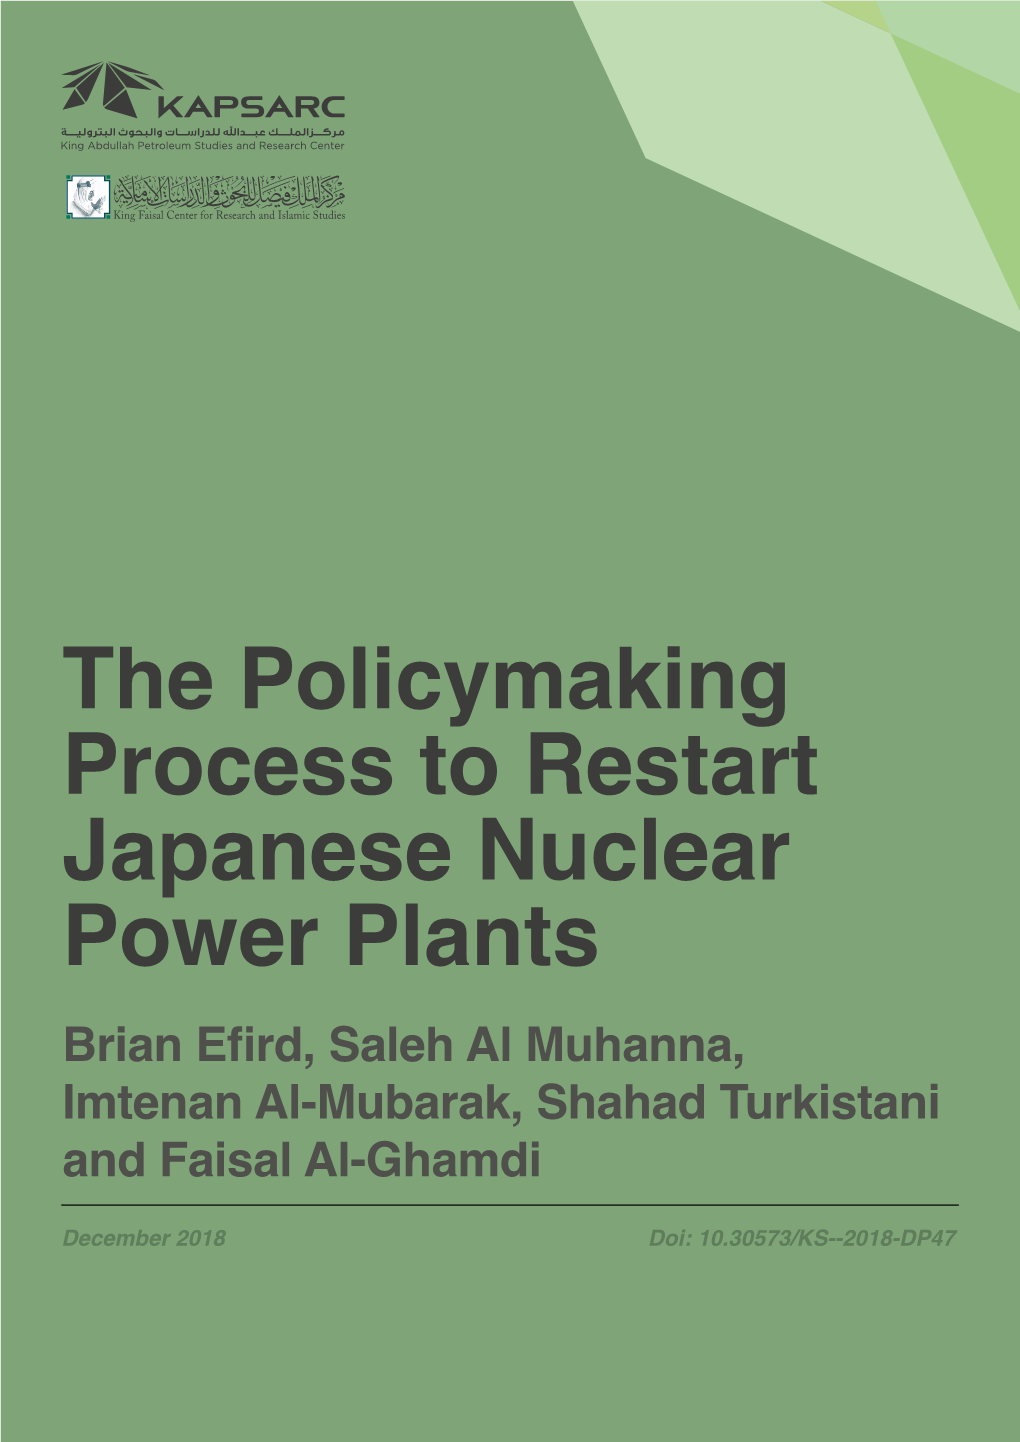 The Policymaking Process to Restart Japanese Nuclear Power Plants Brian Efird, Saleh Al Muhanna, Imtenan Al-Mubarak, Shahad Turkistani and Faisal Al-Ghamdi